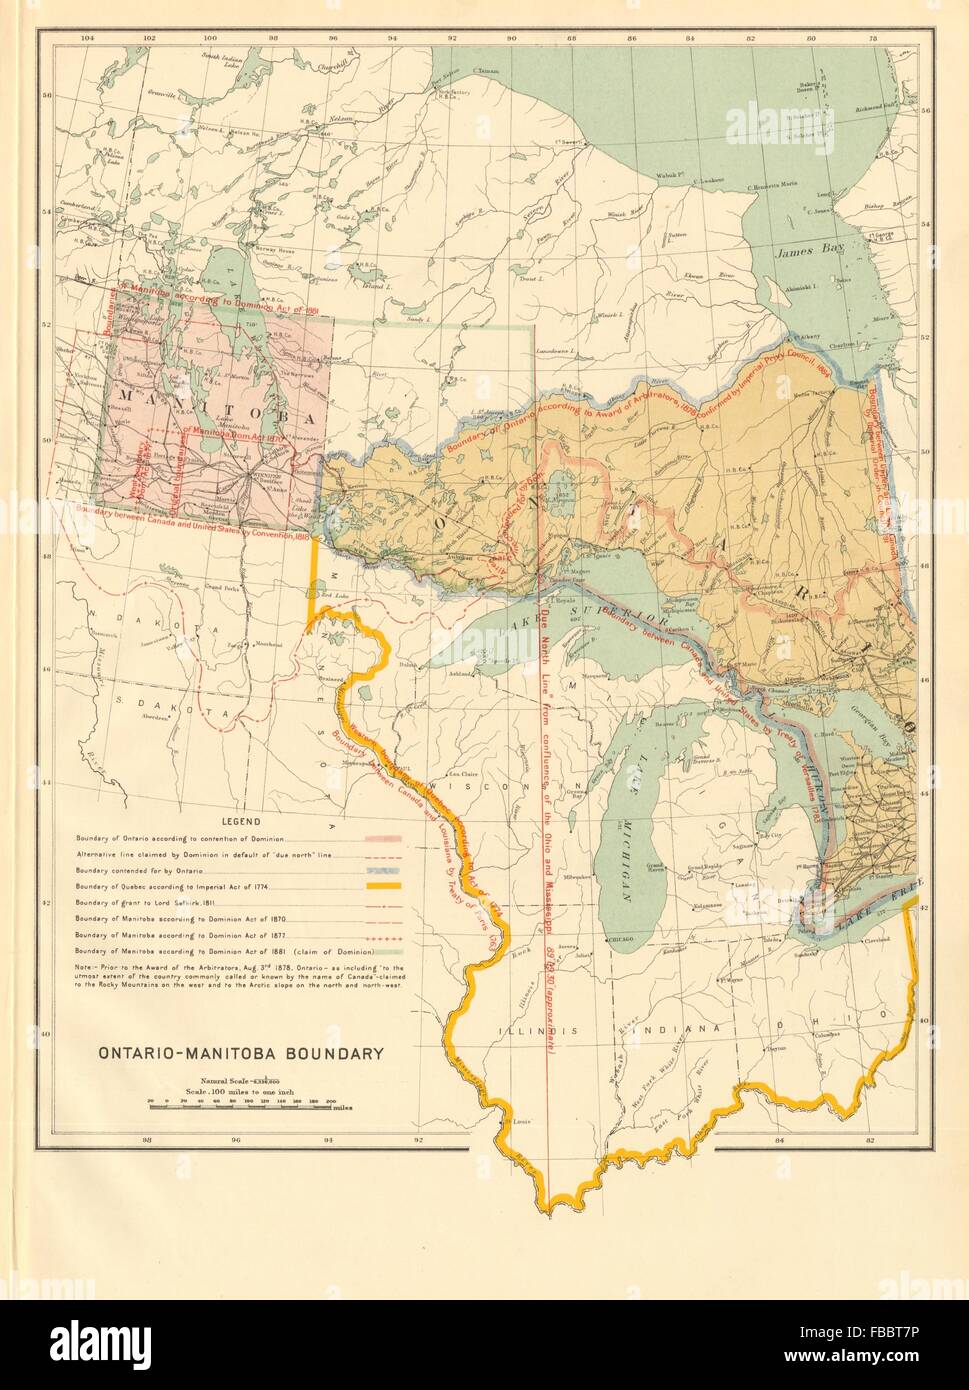 Ontario Manitoba Boundary Dispute Dominion Acts 1870 77 81